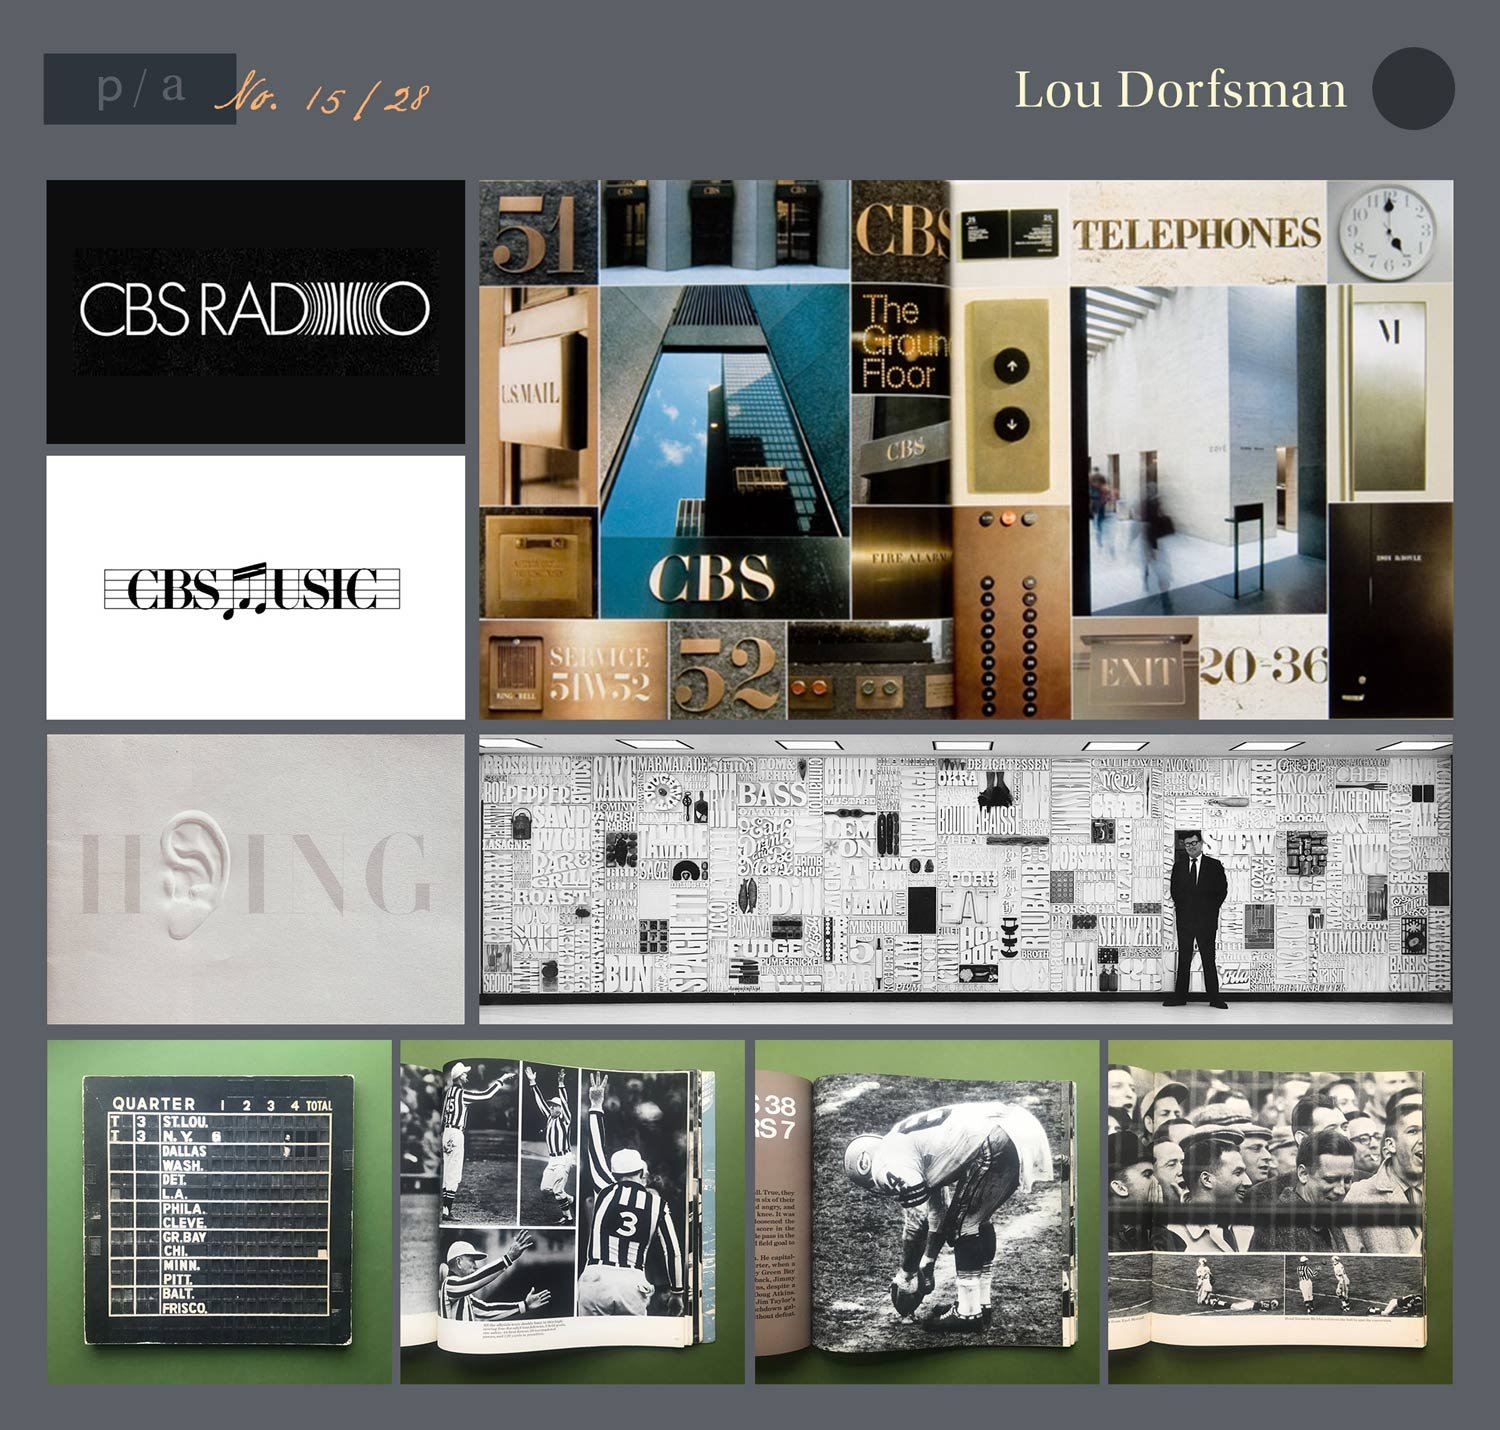 Lou Dorfsman identity and branding work for CBS, CBS Radio, CBS Music, and the NFL on CBS